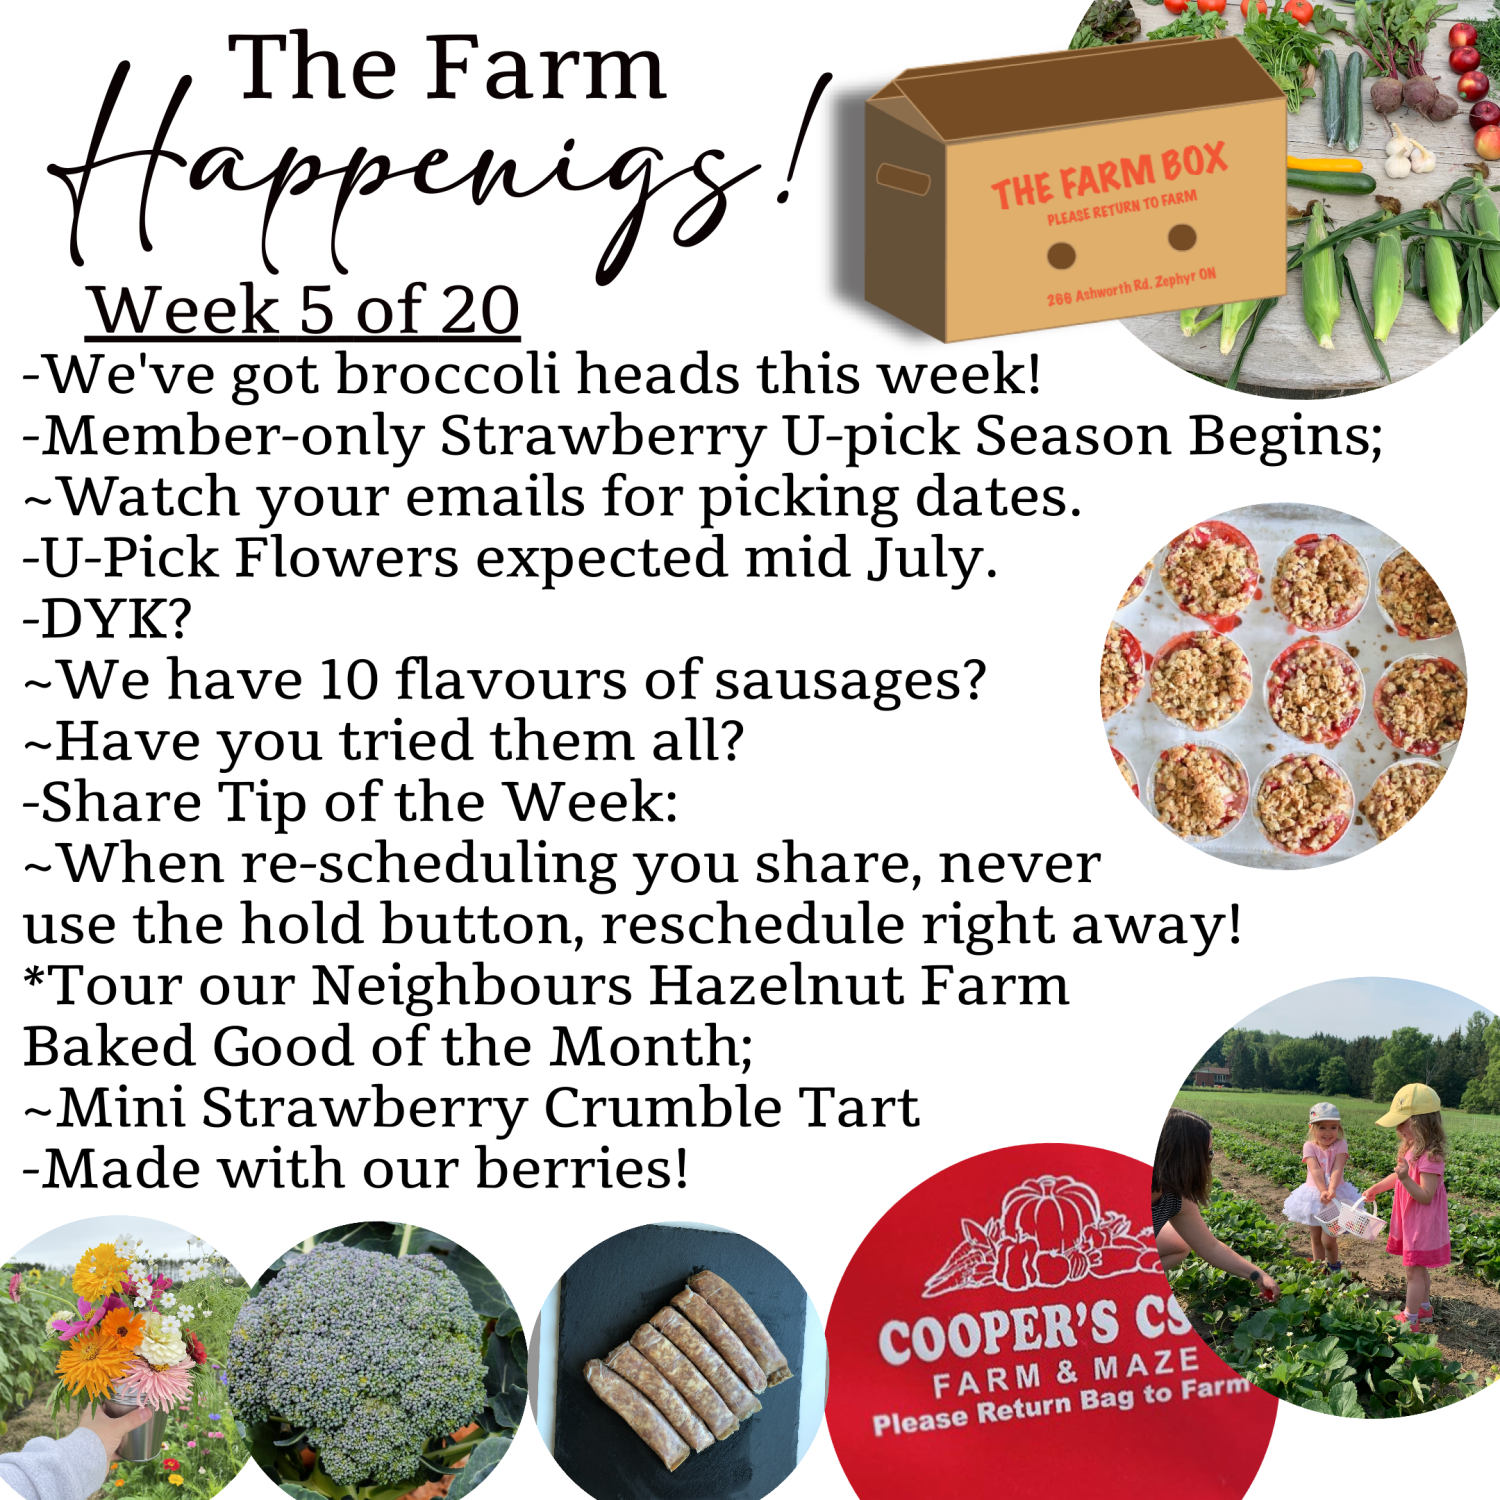 Previous Happening: "The Farm Box"-Coopers CSA Farm Farm Happenings Week 5 of 20